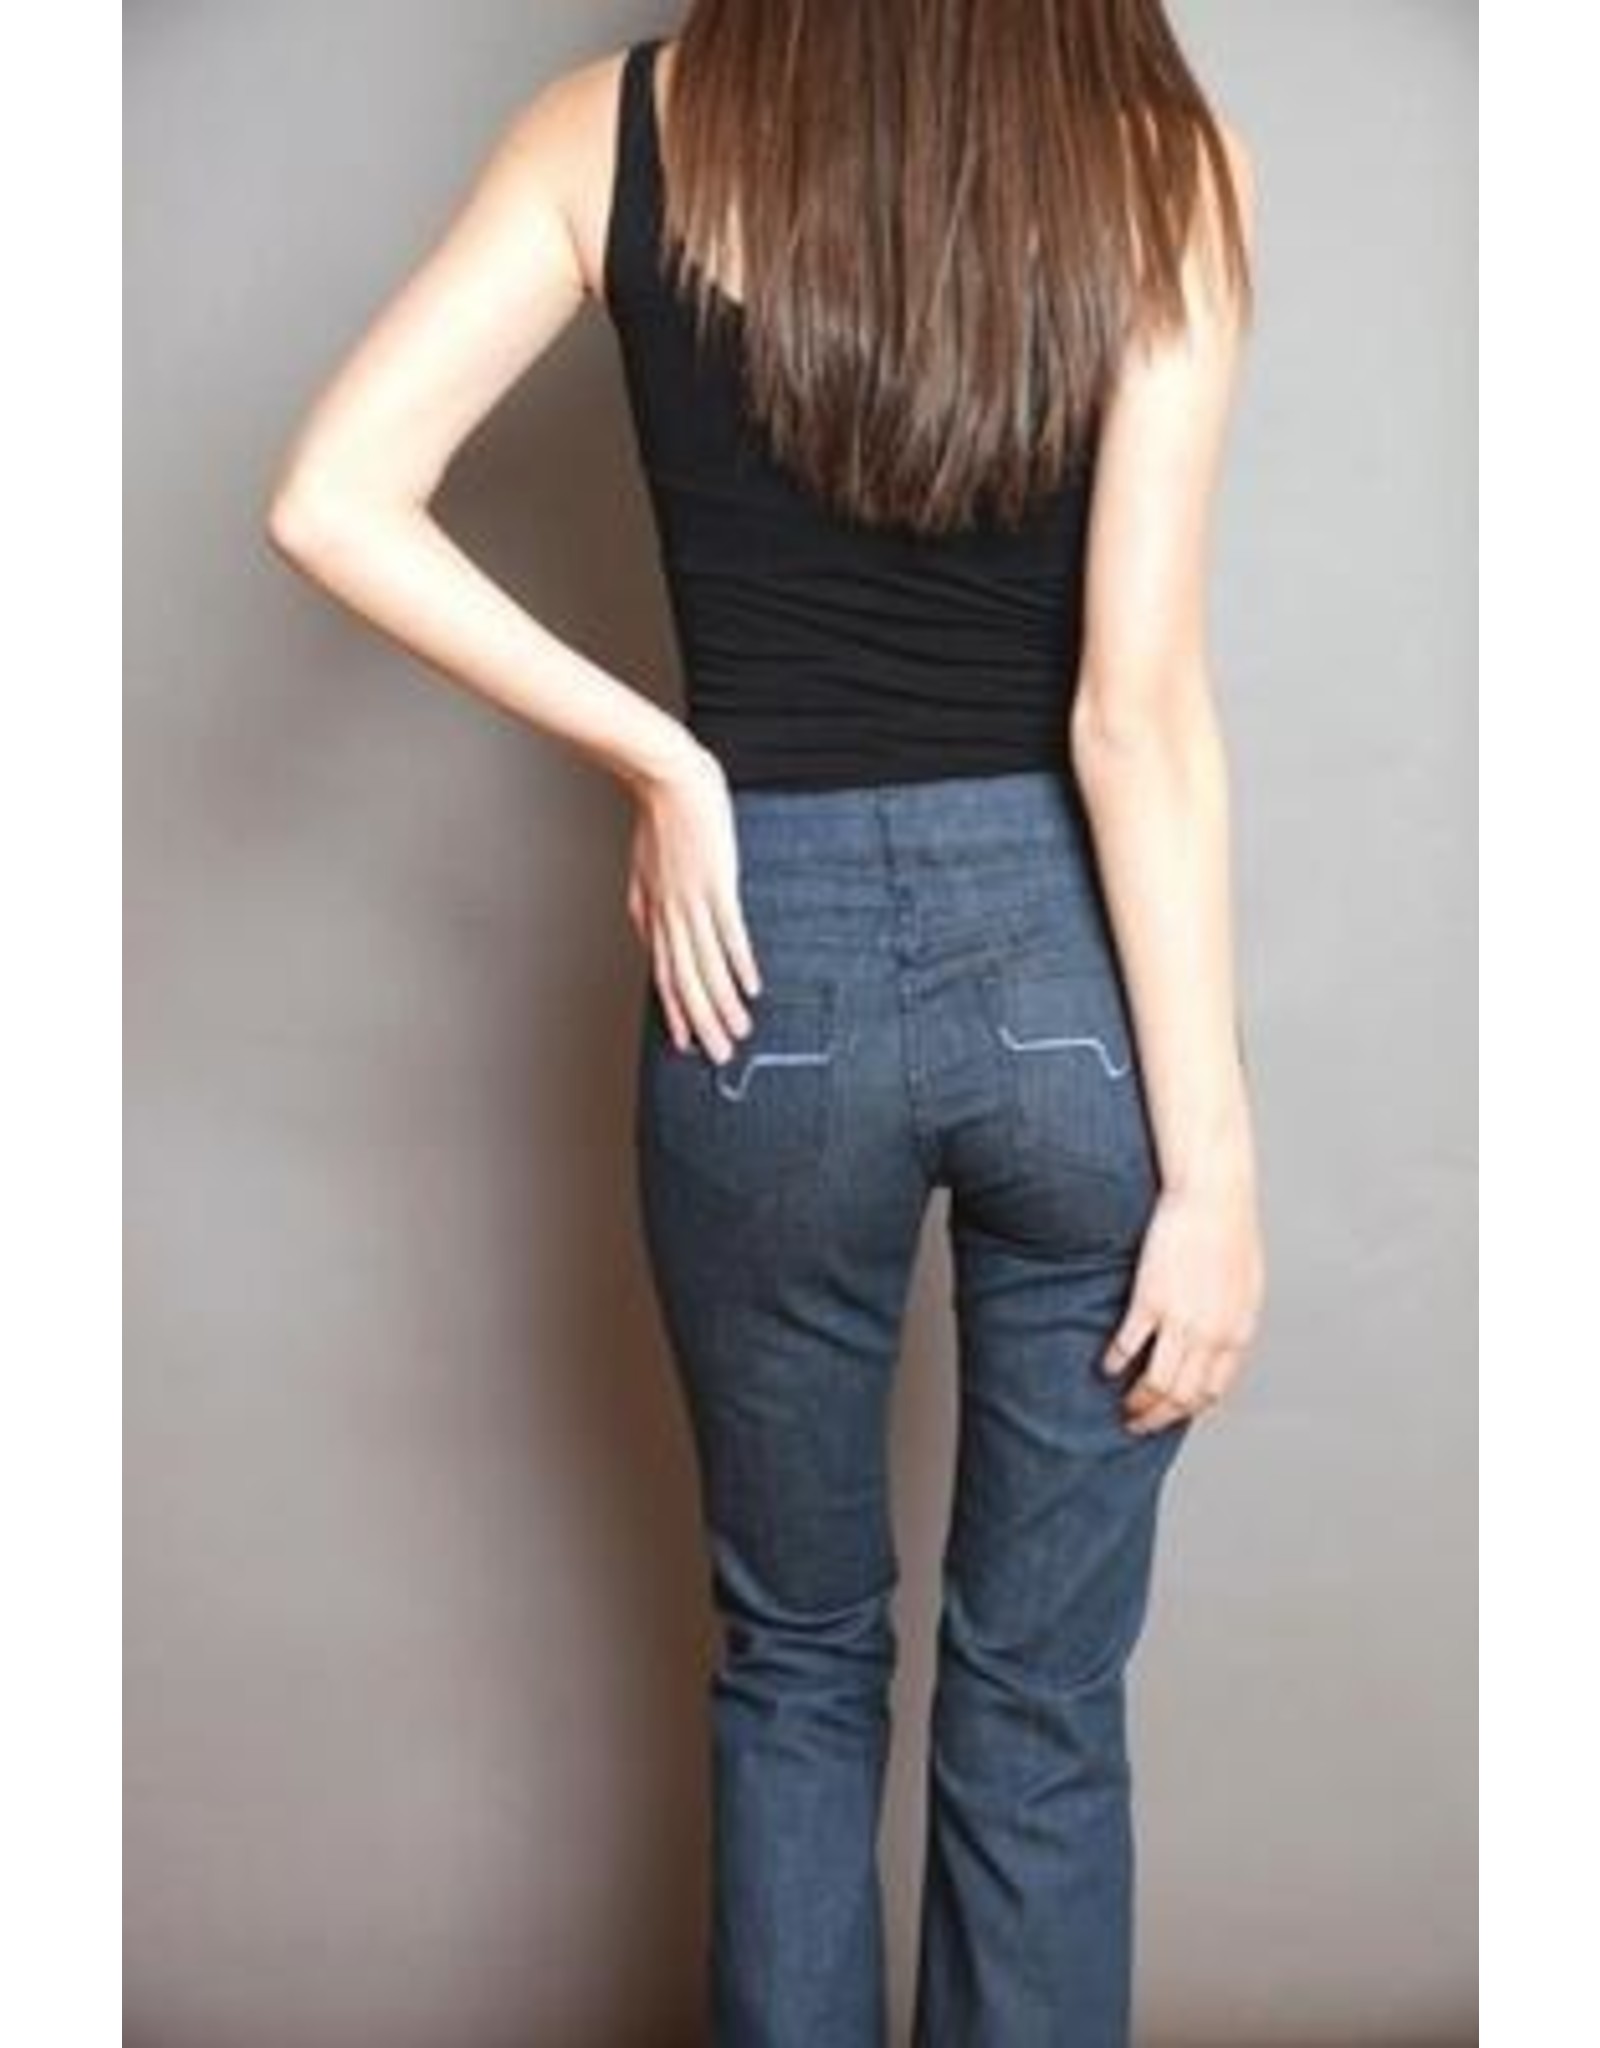 Jeans-Womens KIMES RANCH Lola